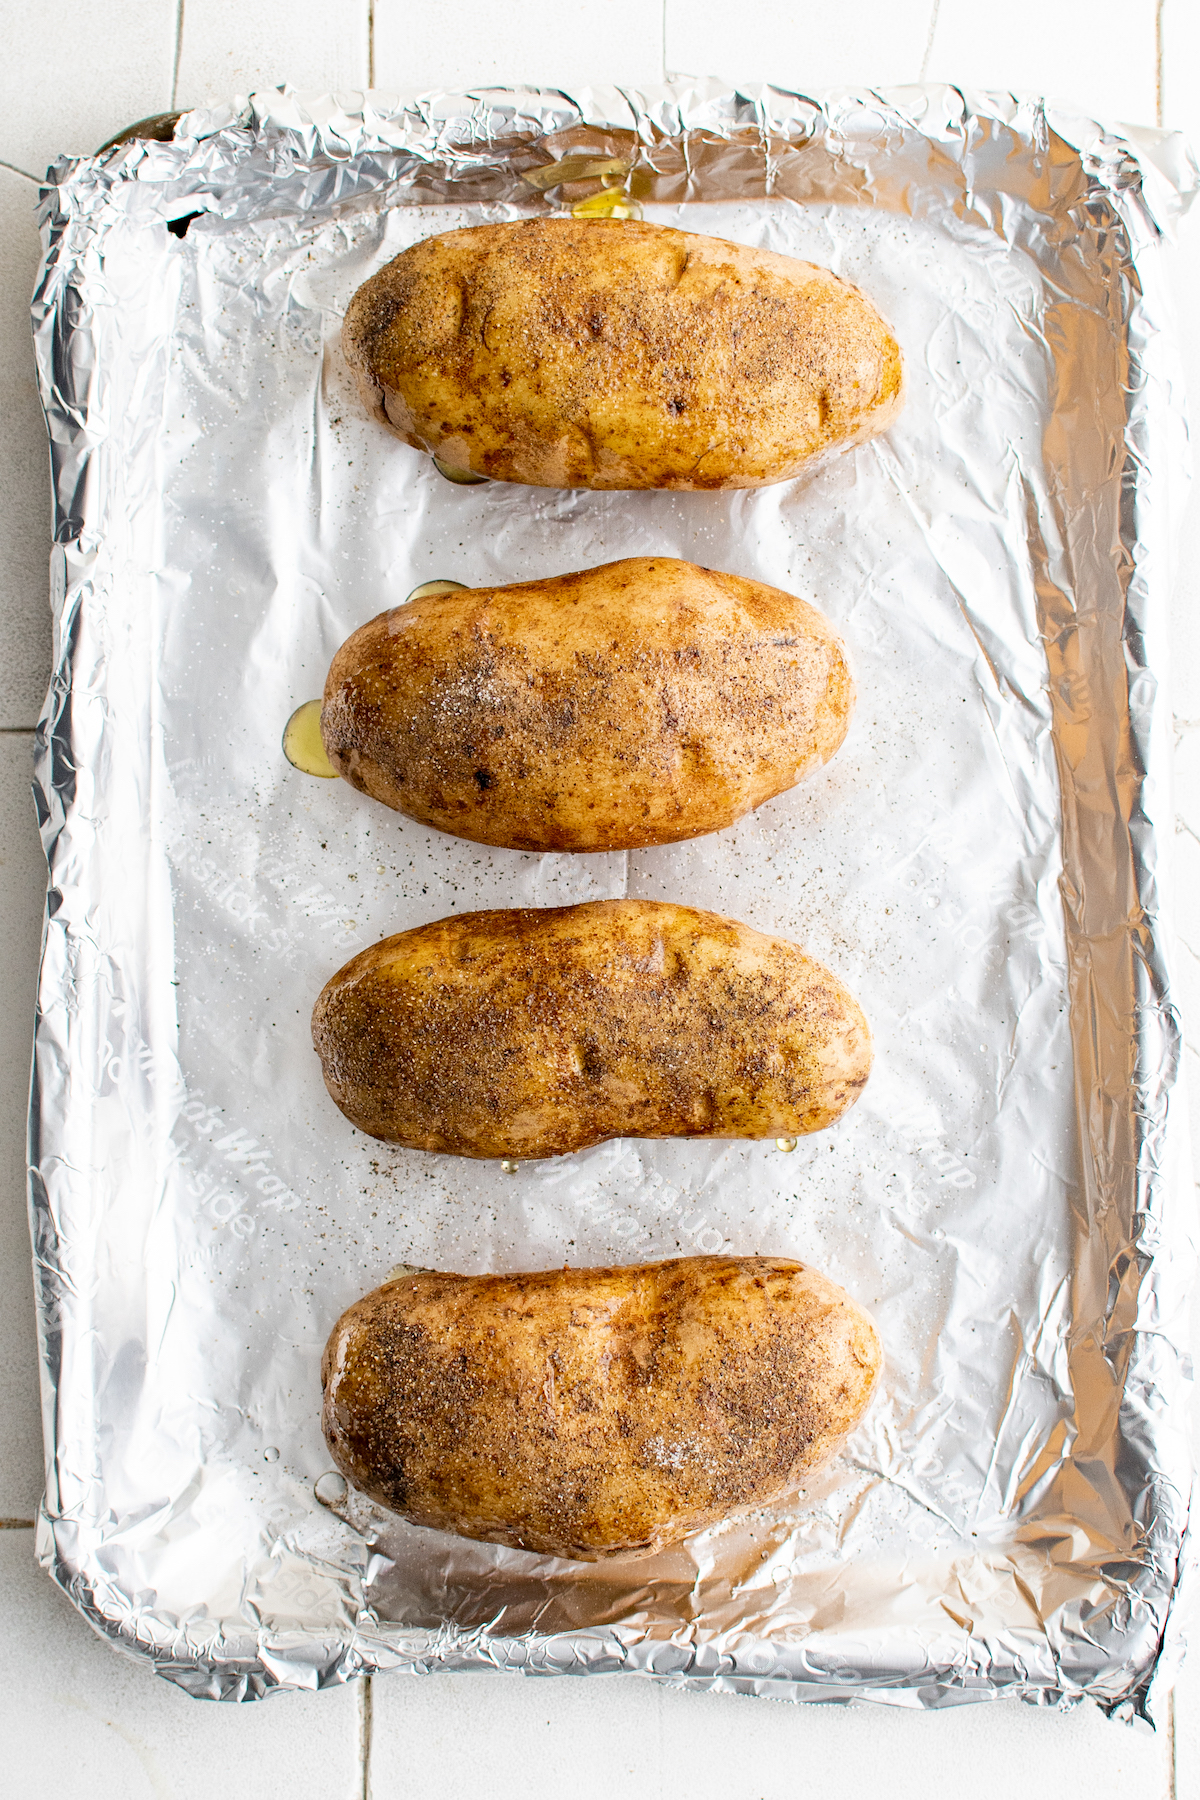 Four potatoes on a baking sheet, oiled and seasoned.